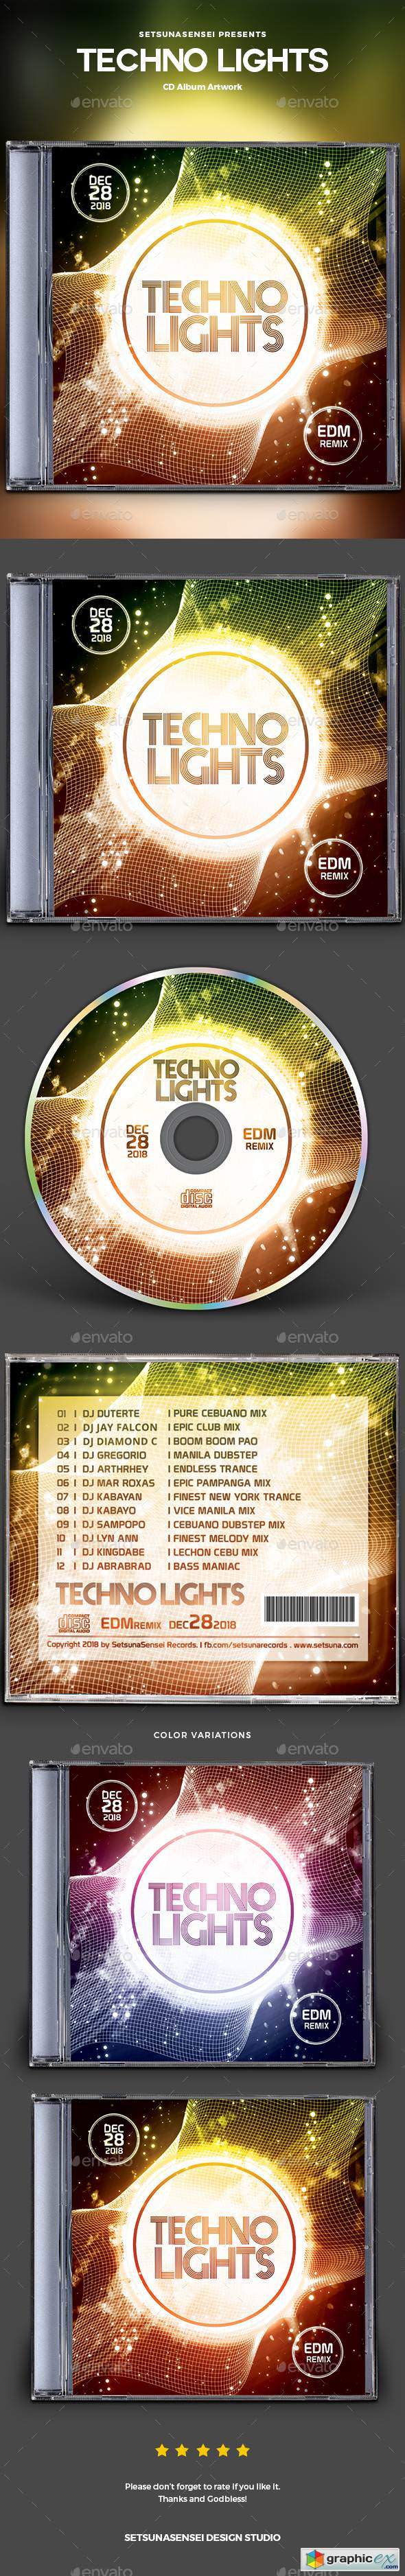 Techno Lights CD Album Artwork